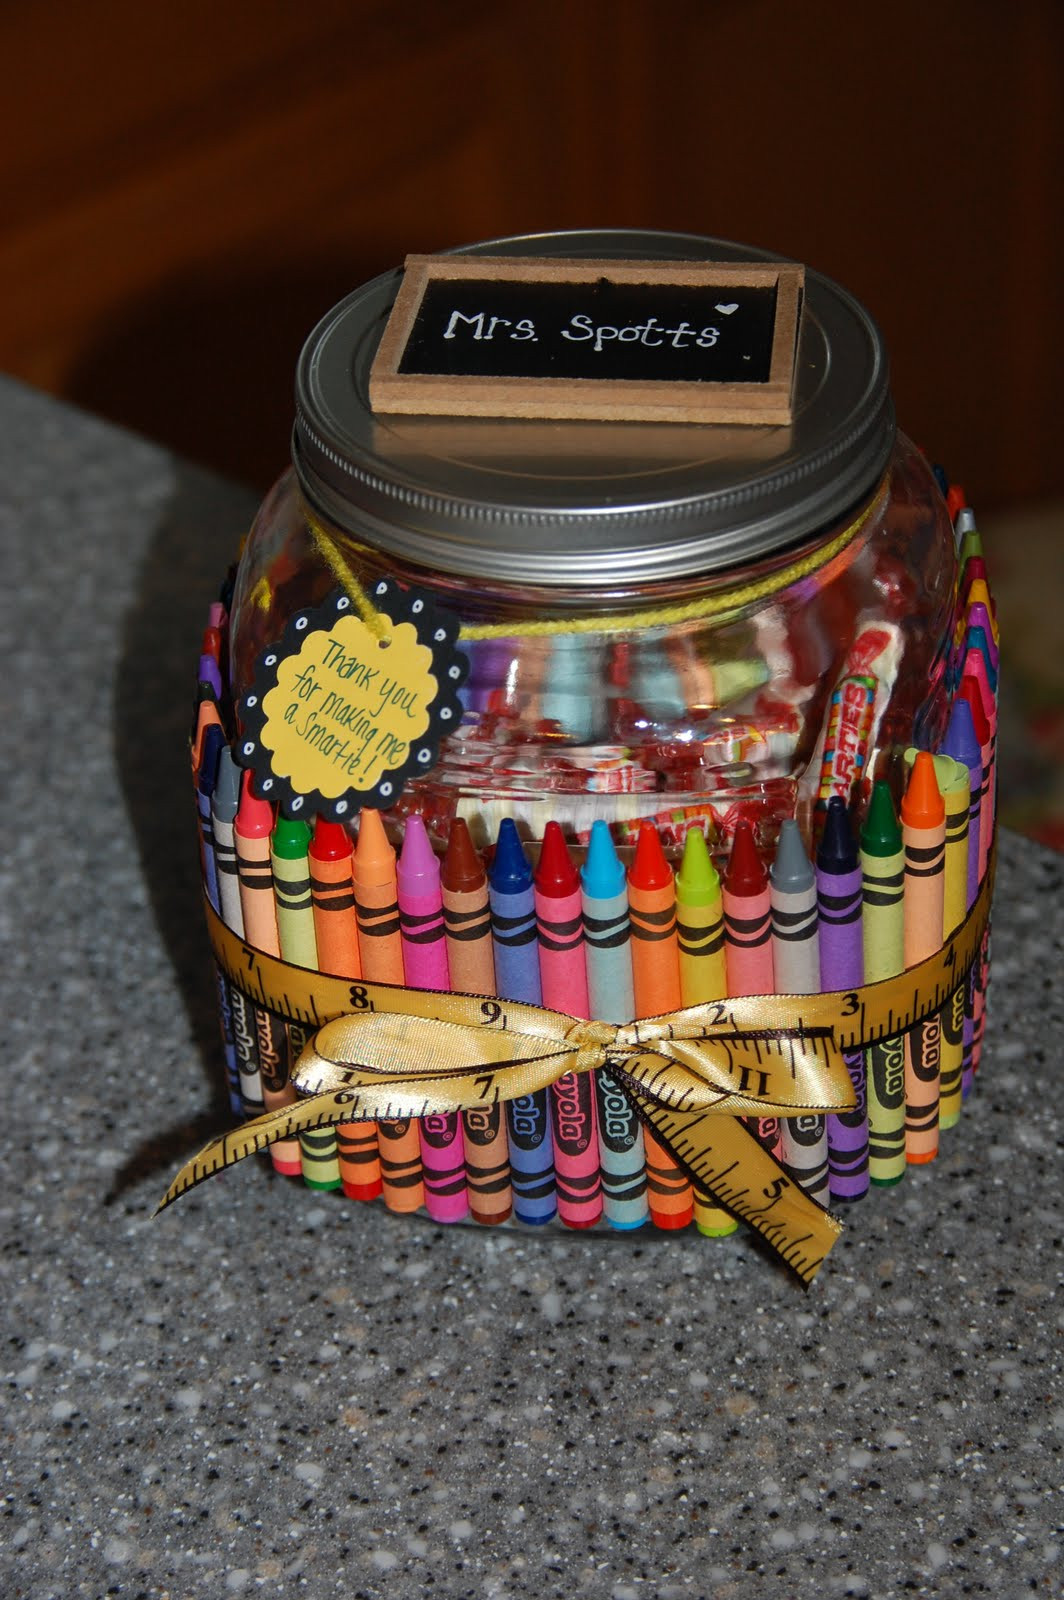 Preschool Teacher Holiday Gift Ideas
 My Remodeled Nest Last Day of Preschool & Teacher Gift